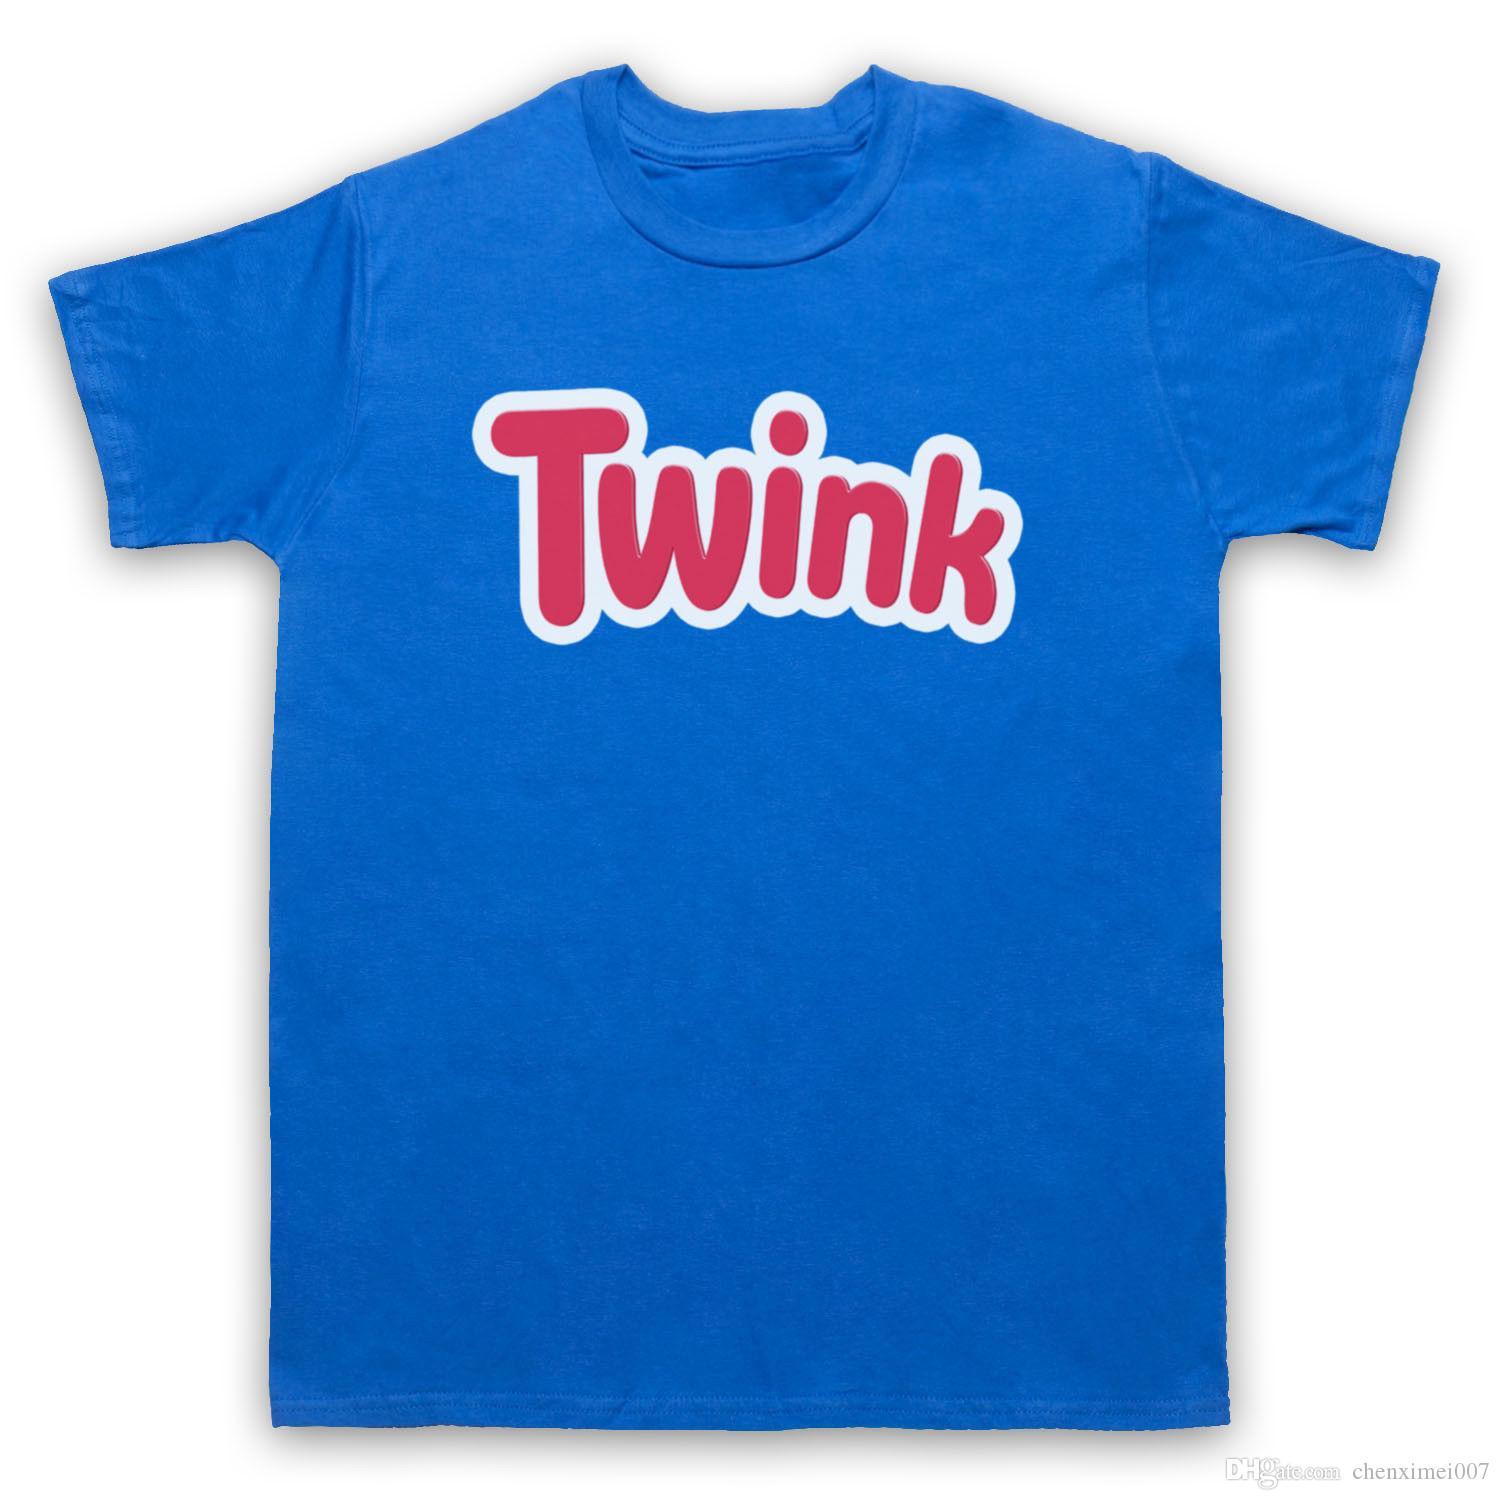 Twinkie Logo - TWINK TWINKIE LOGO PARODY GAY HUMOUR LGBT RIGHTS PRIDE MENS WOMENS